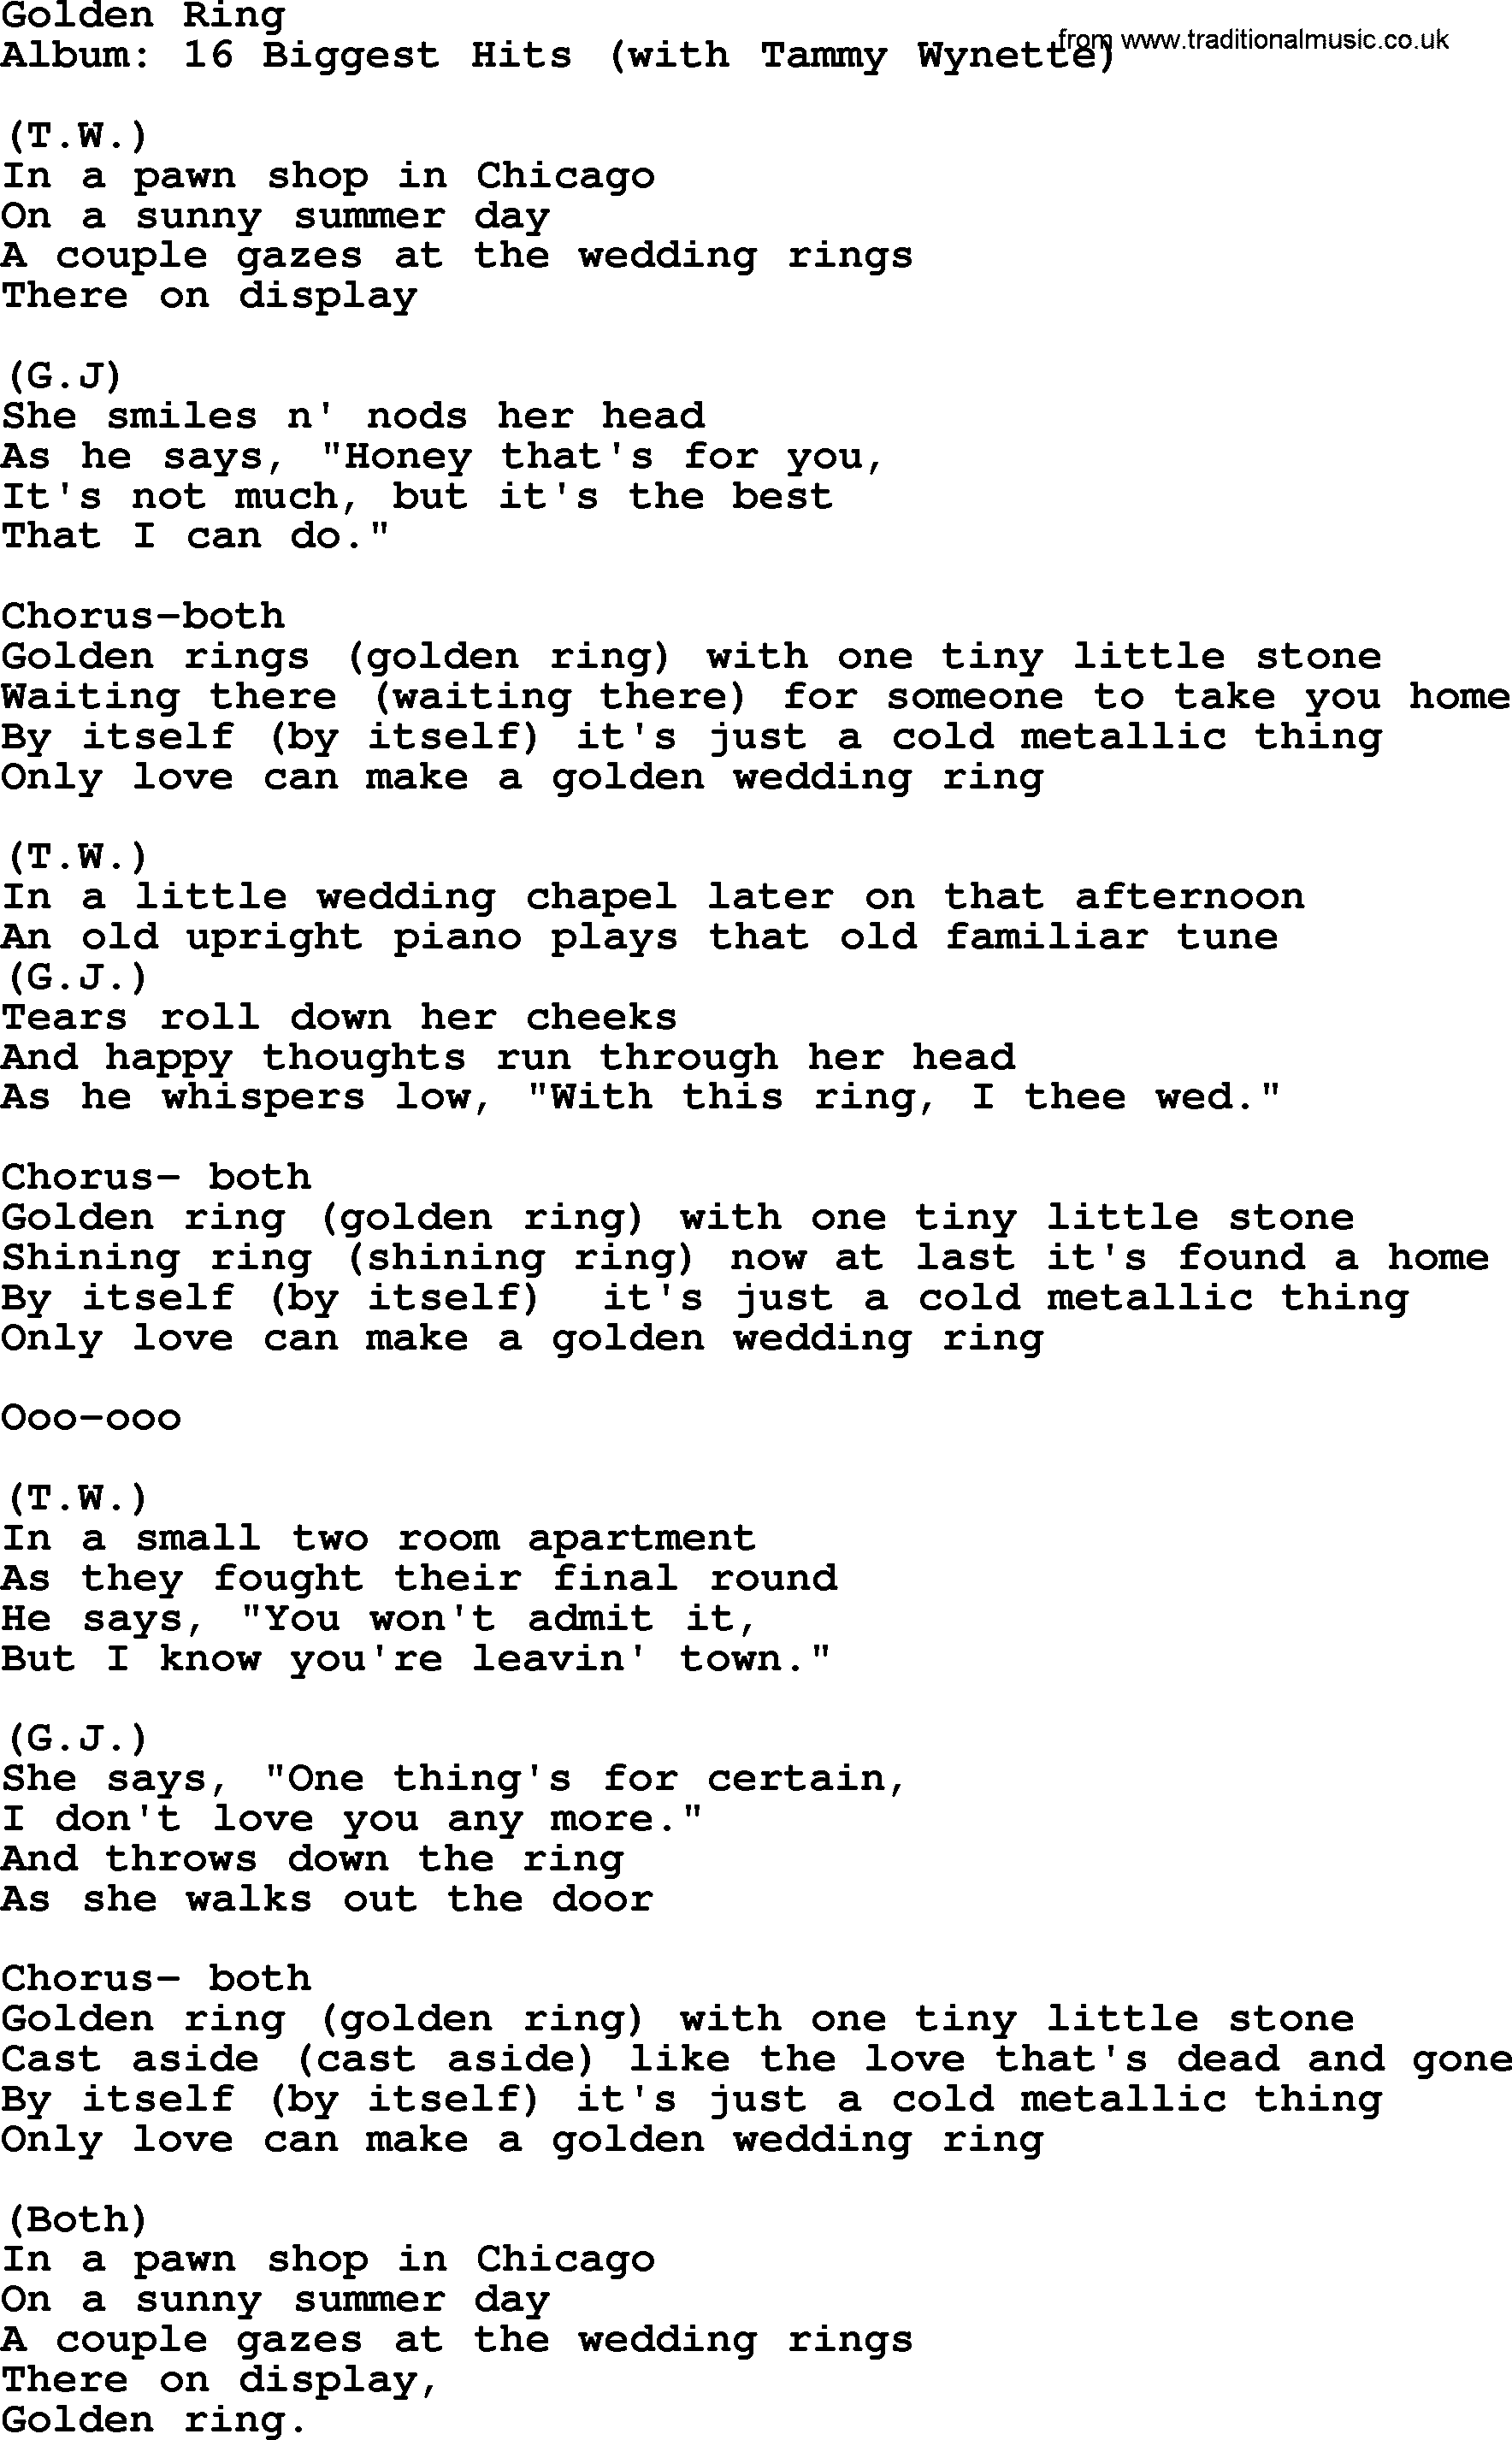 George Jones song: Golden Ring, lyrics